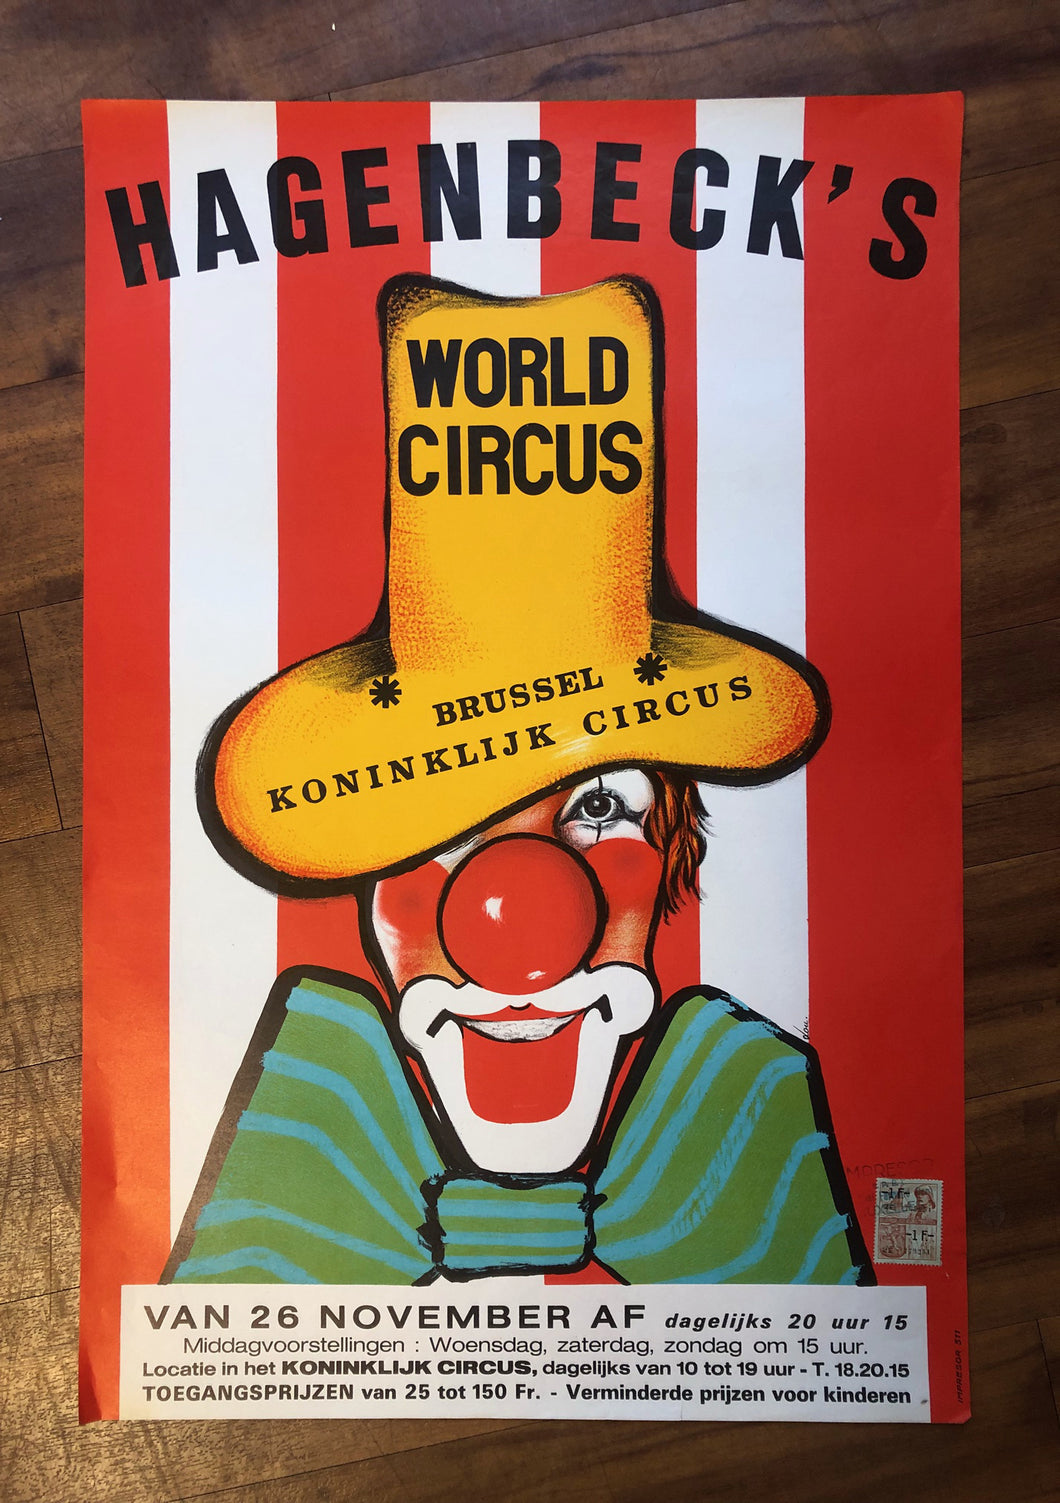 Hagenbecks World Circus